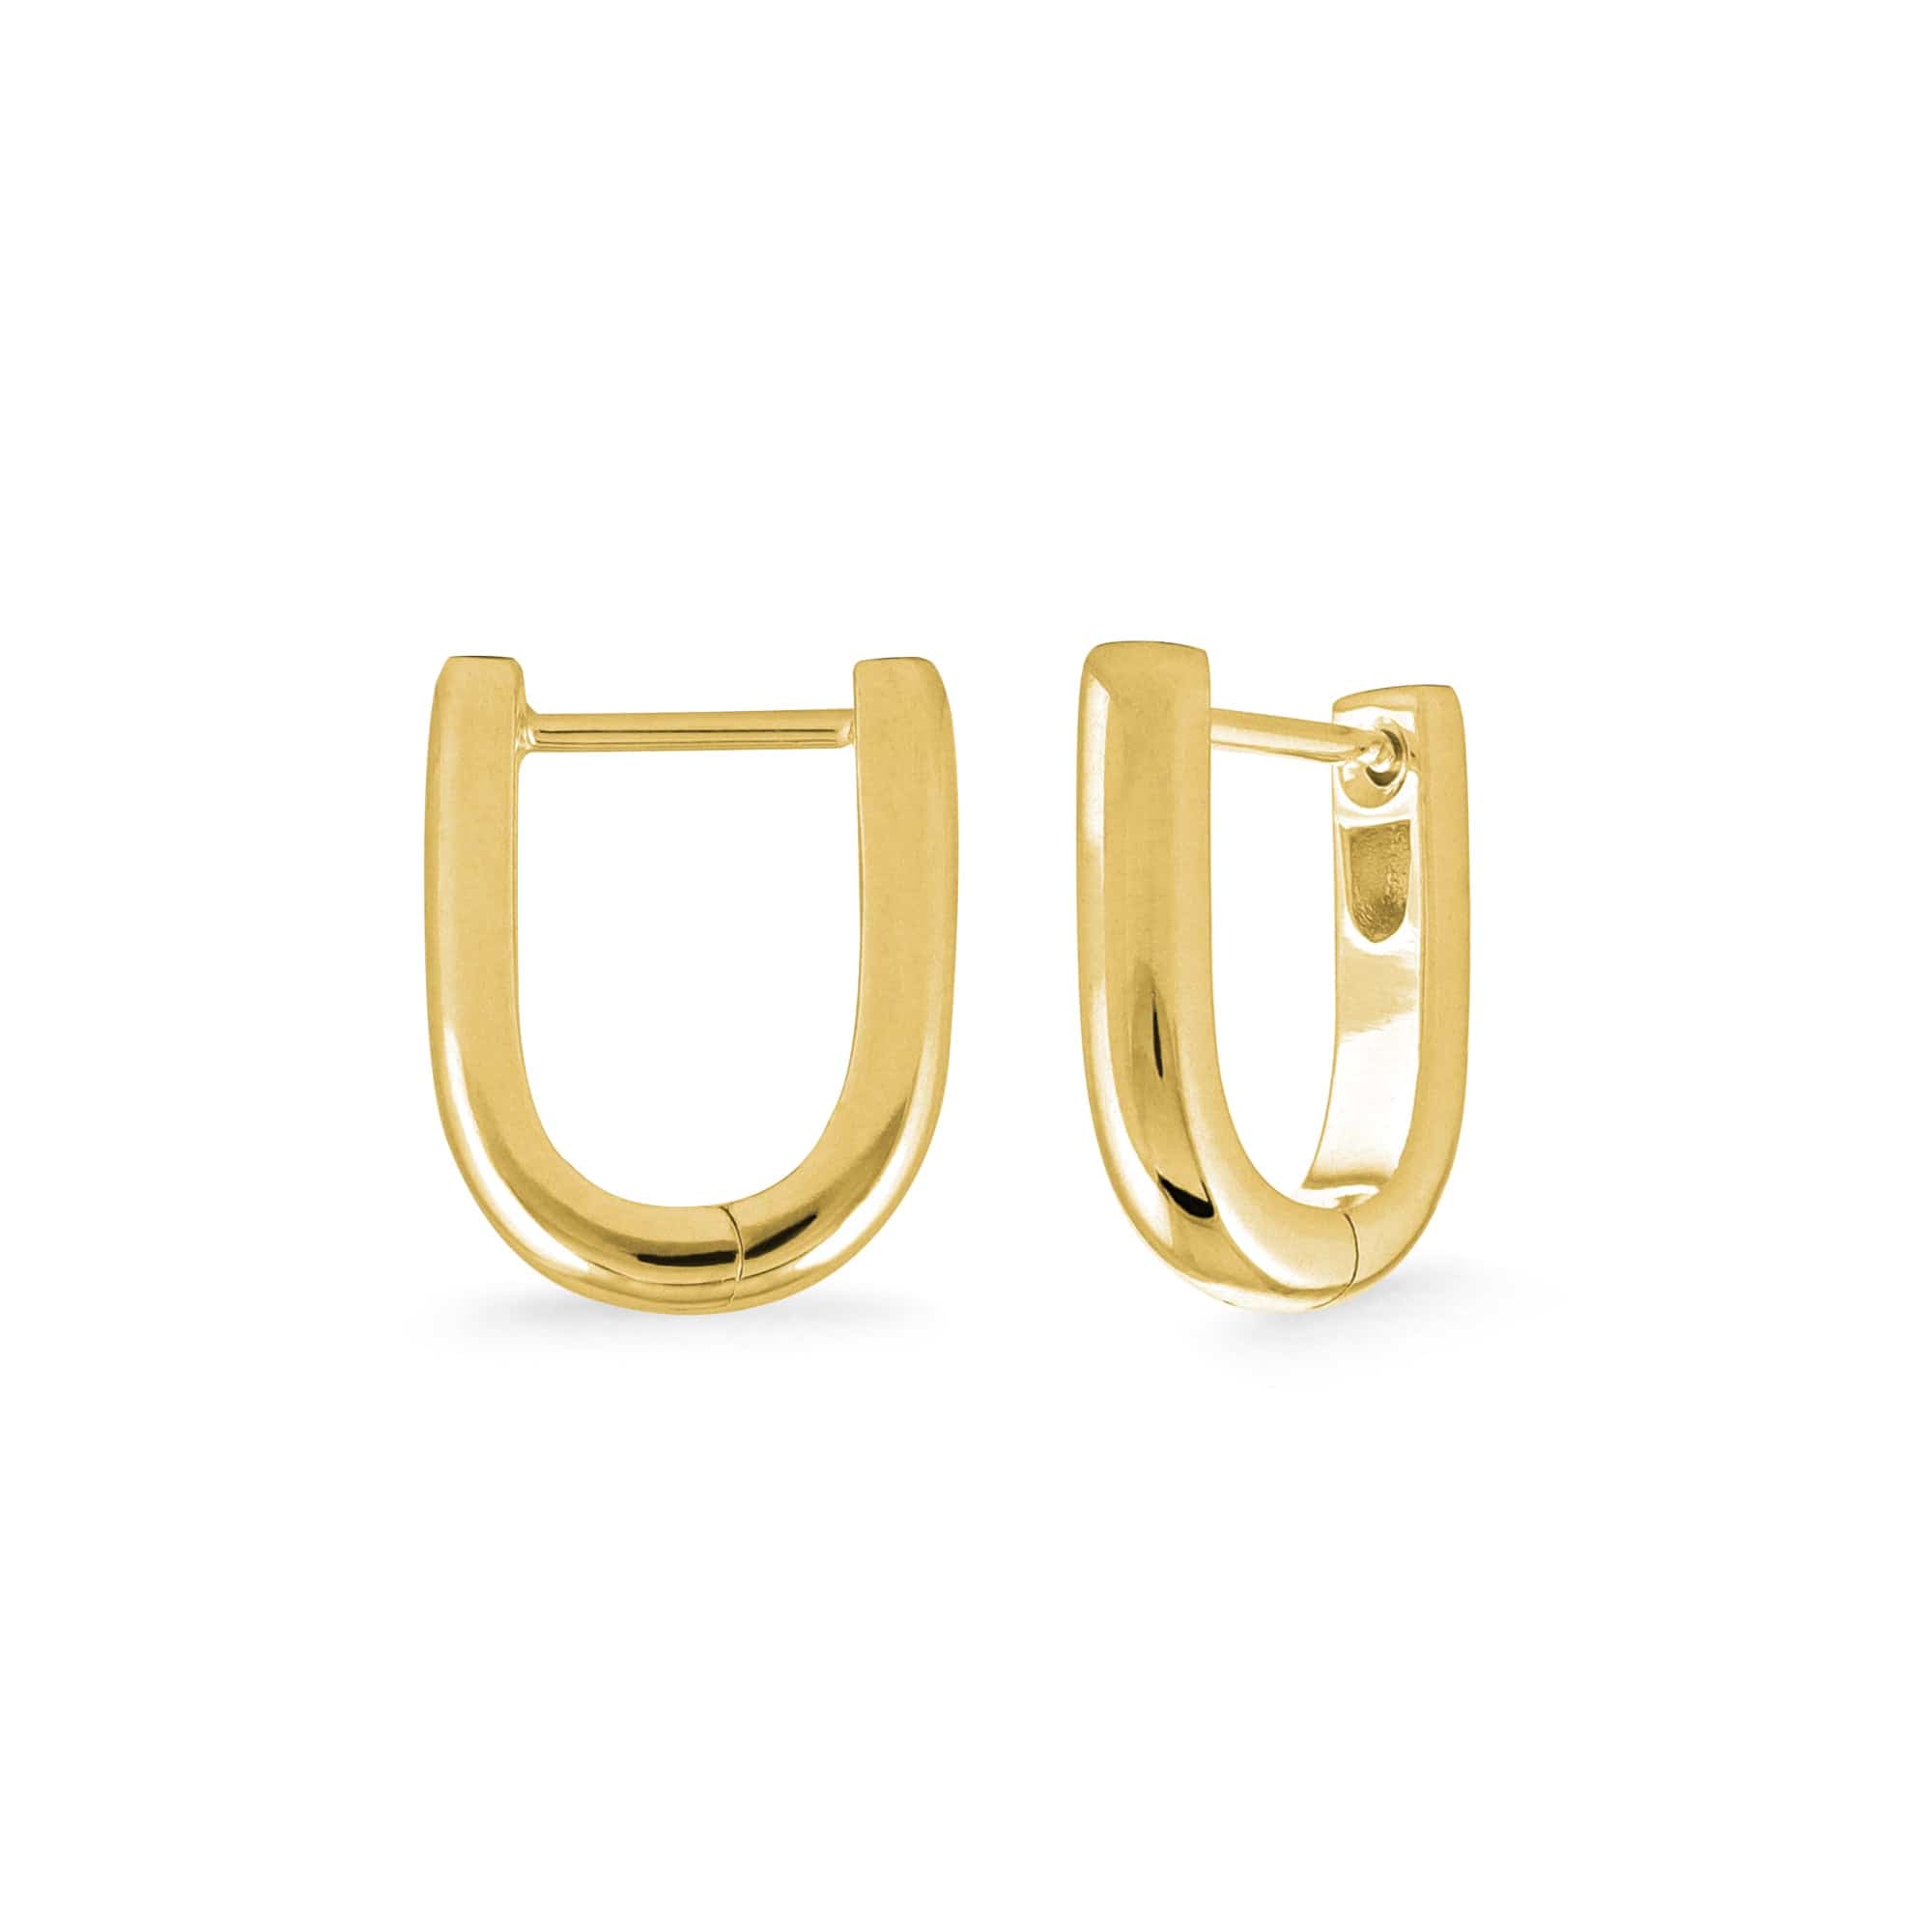 Boma Jewelry Earrings 14K Gold Plated U-Shape Huggie Hoops